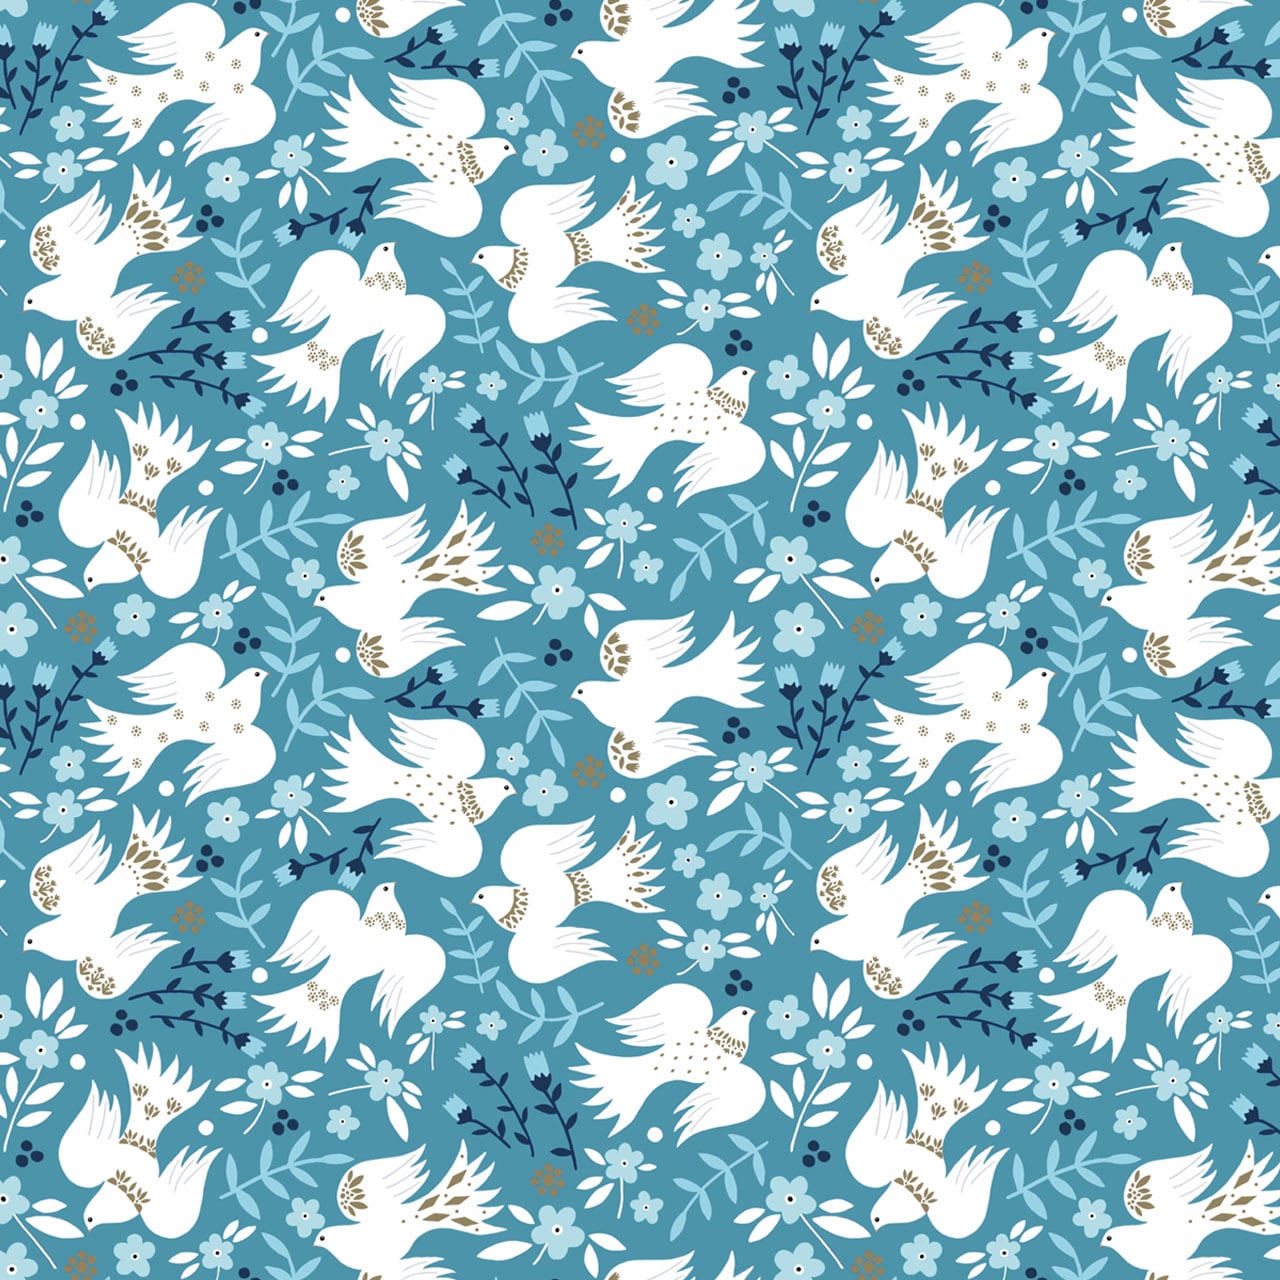 Dashwood Studios Fabric - Starlit Hollows - Doves on Blue